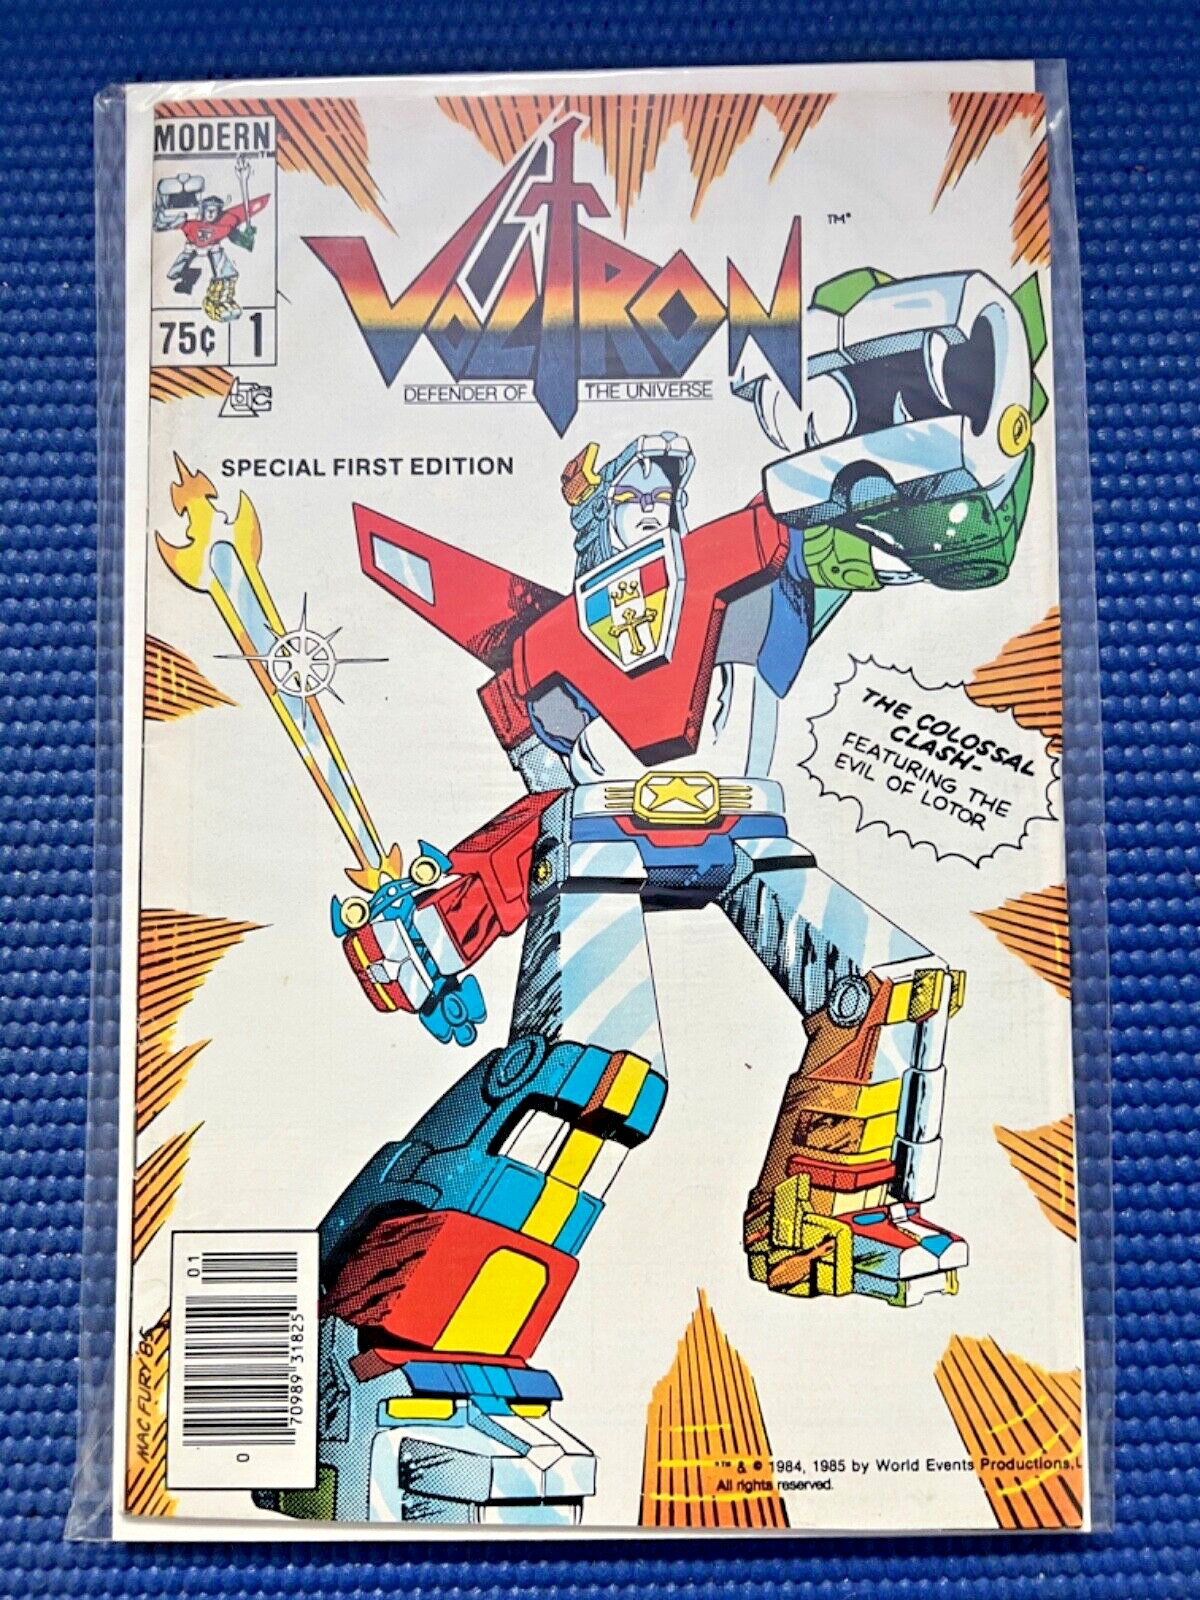 VOLTRON Defender of the Universe #1  VF+ Modern Comics 1985